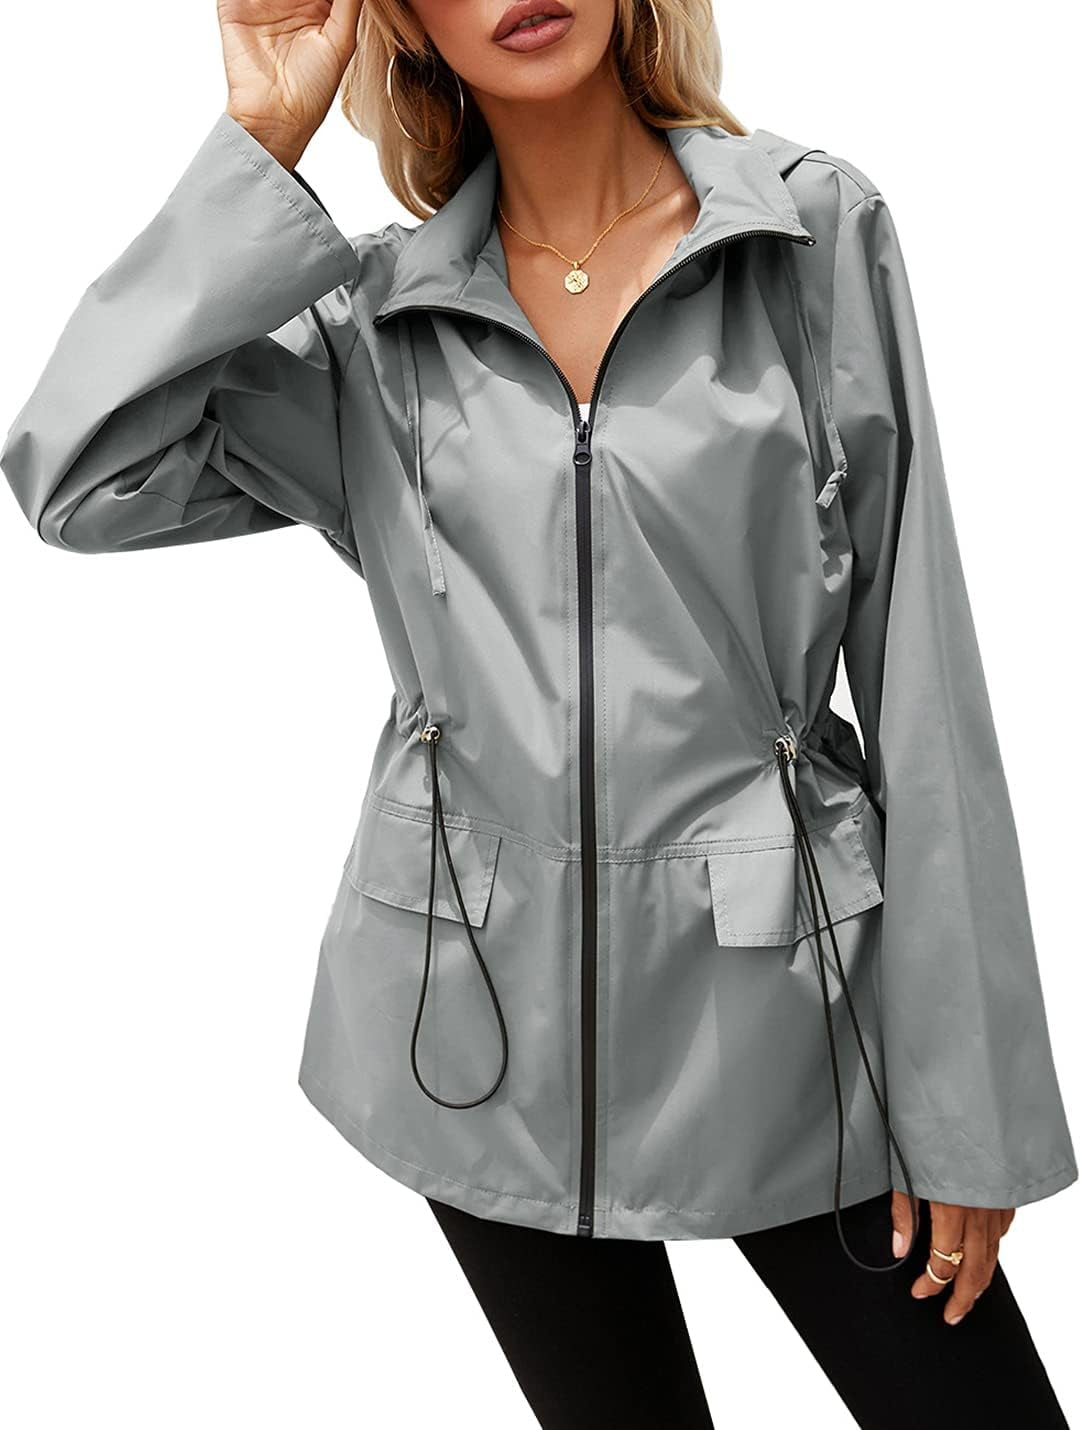 Kukuzhu Womens Waterproof Hooded Raincoat Lightweight Rain Jacket ...